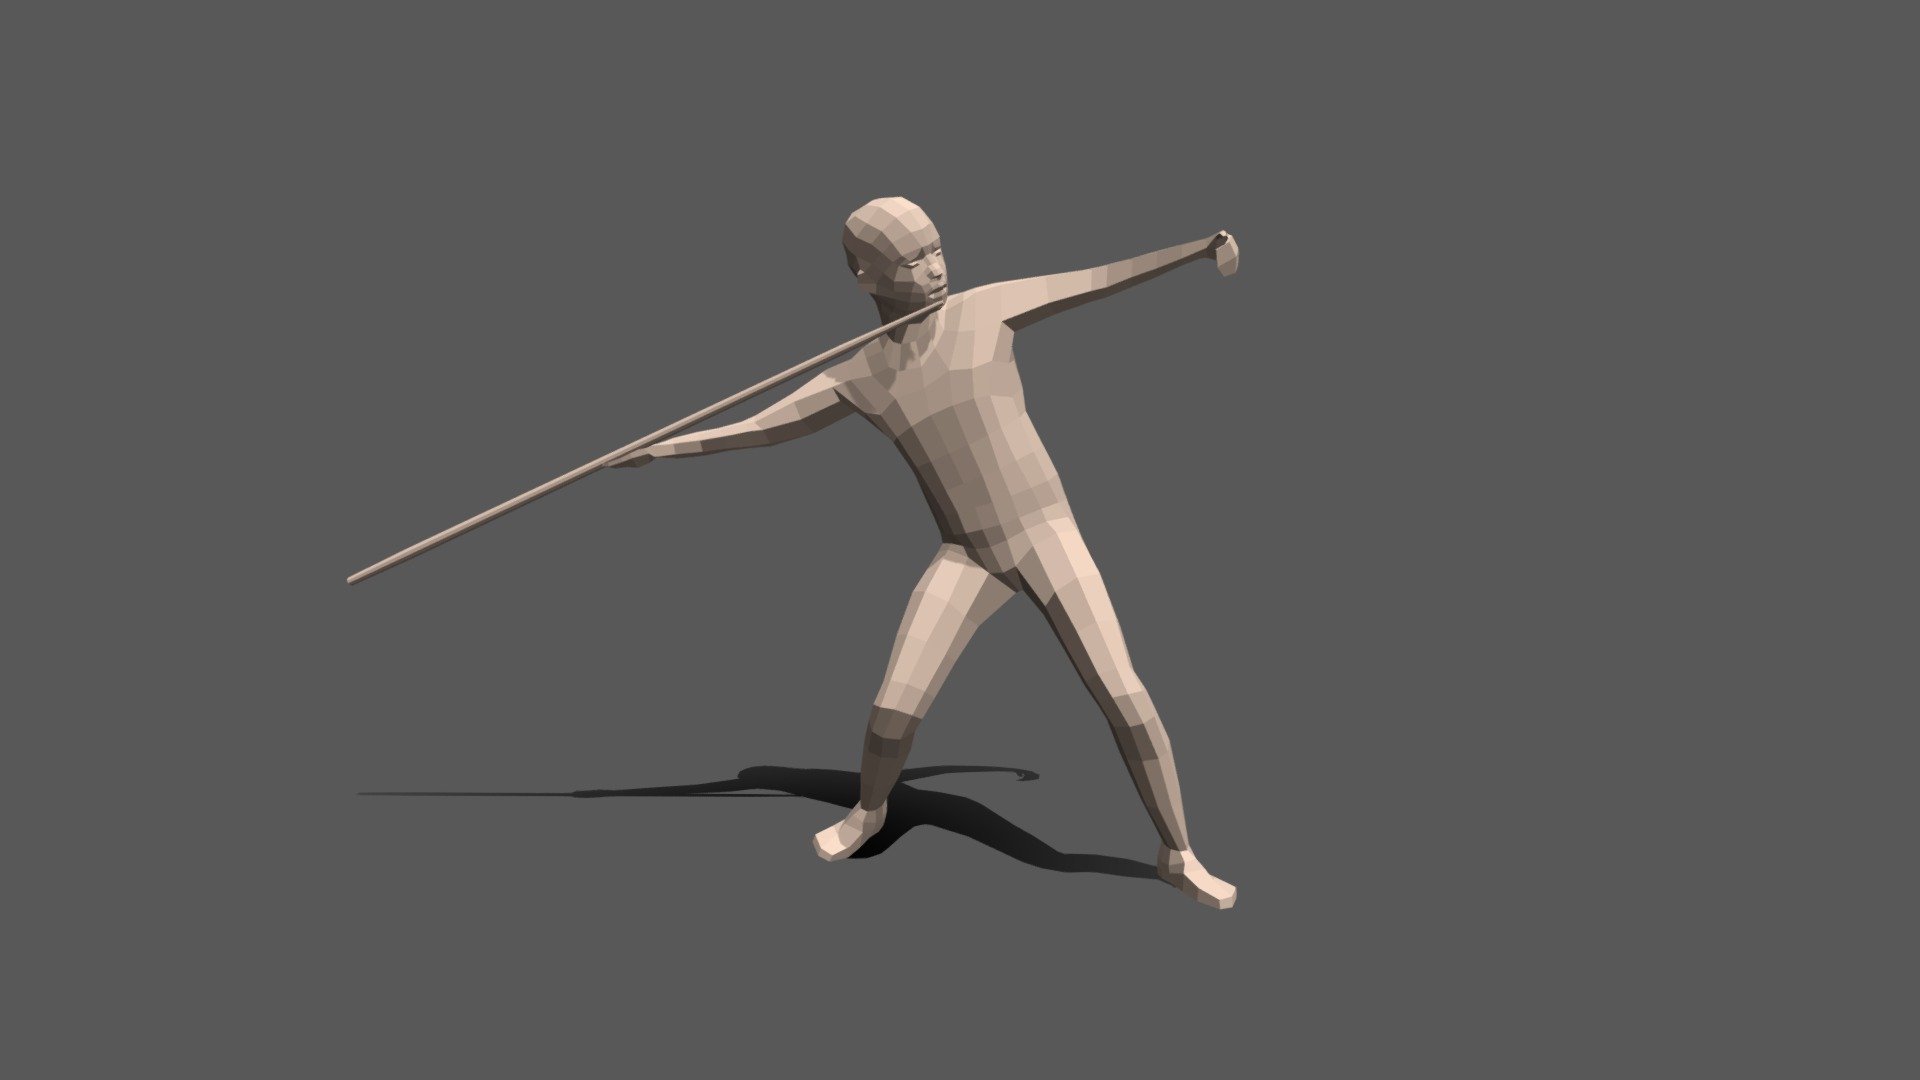 Spear & Sword Throwing - Minecraft Animation Tutorial (Blender 4 0) -  YouTube